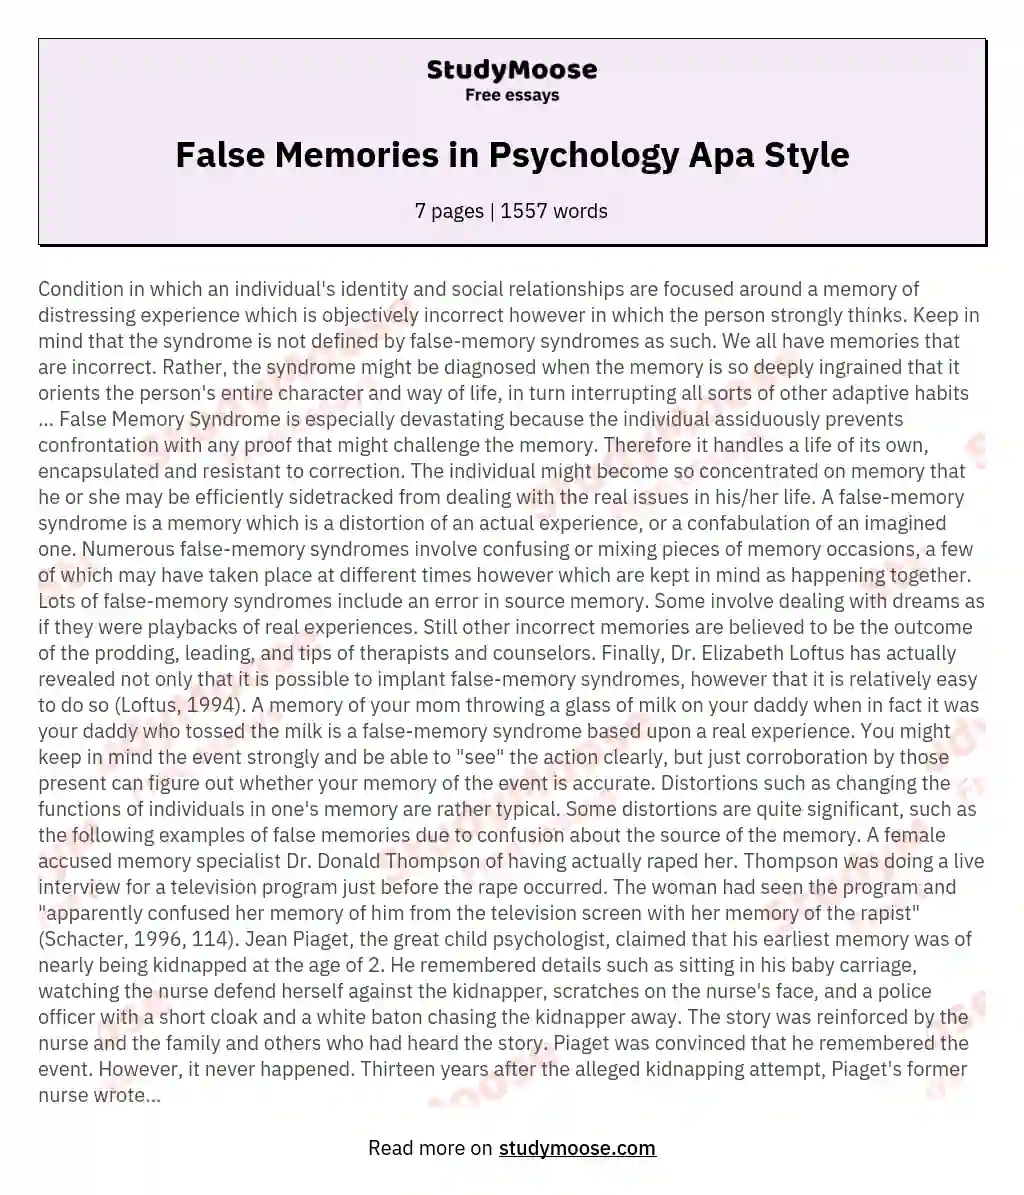 False Memories in Psychology Apa Style essay